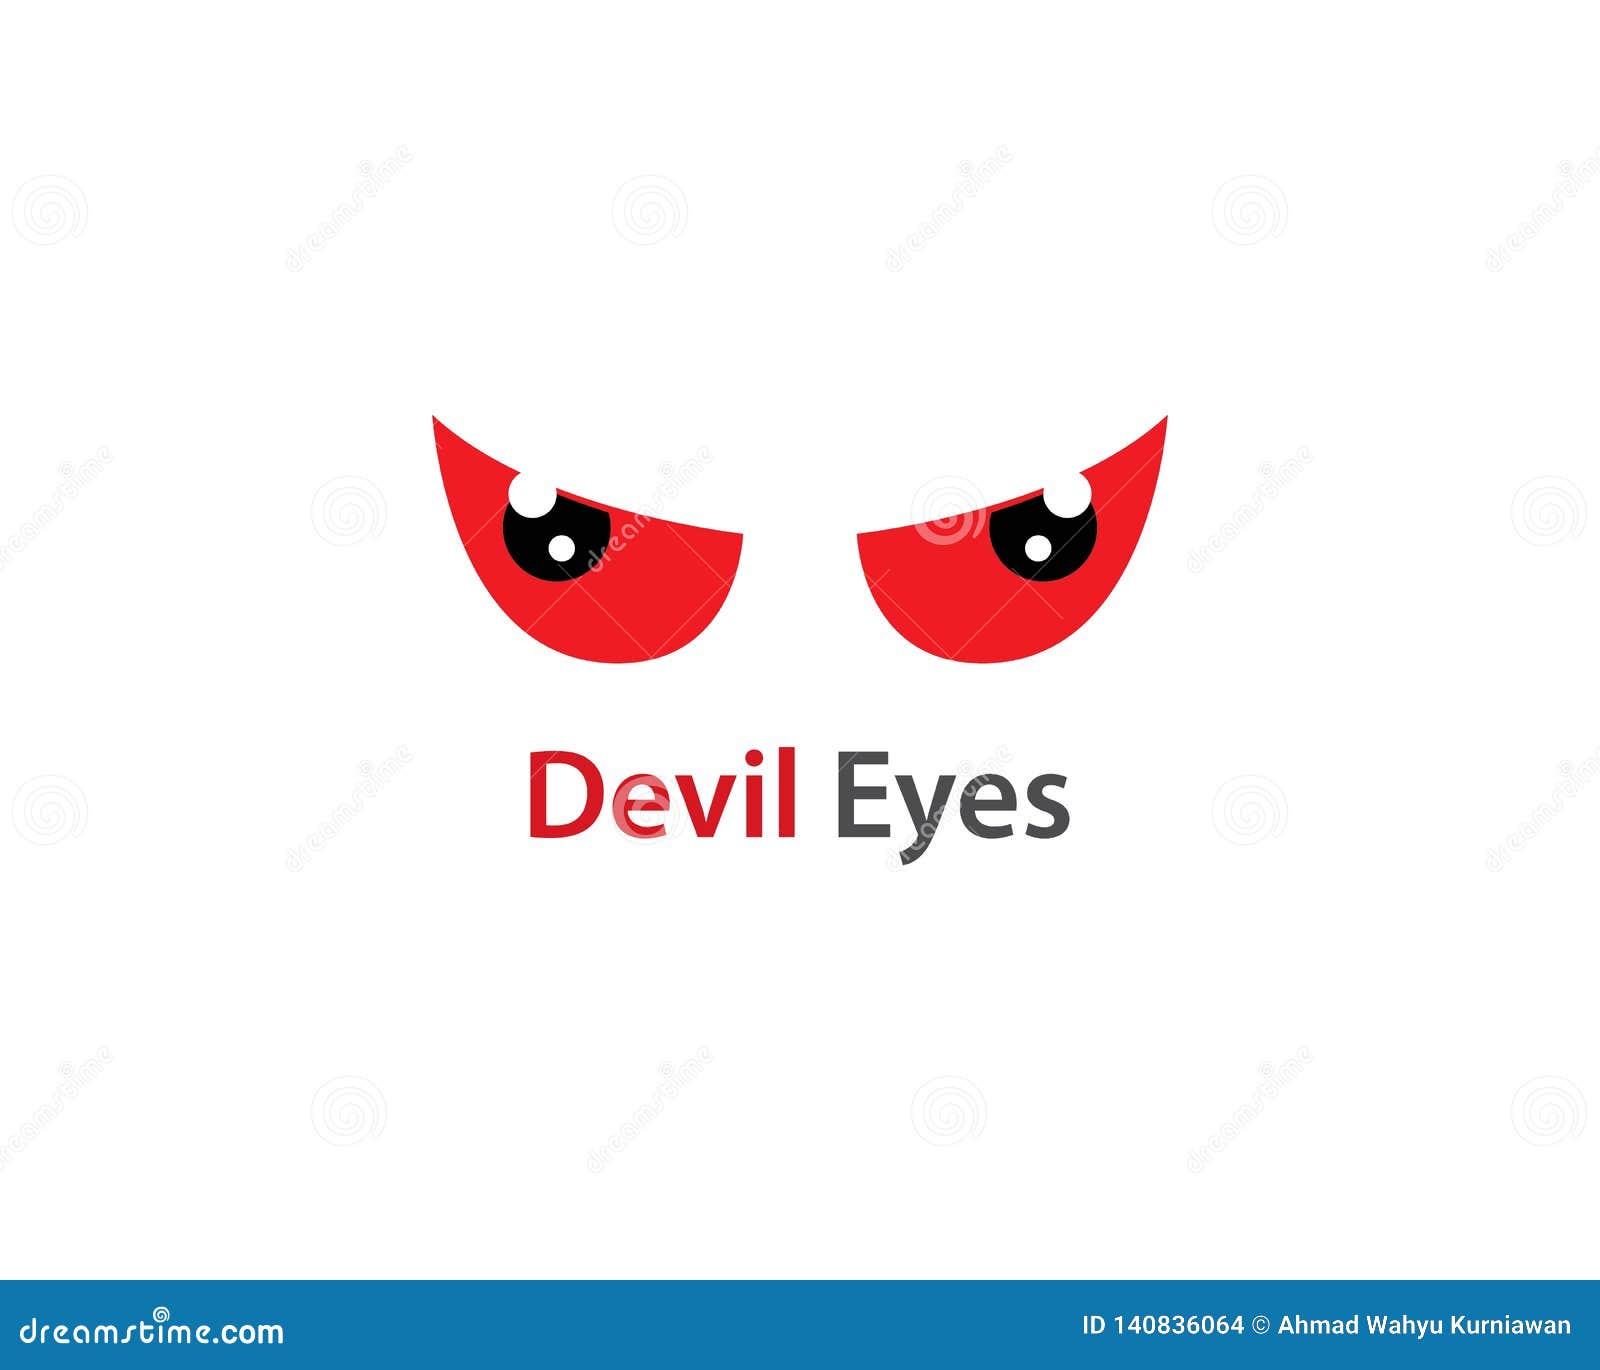 Angel with devil eyes